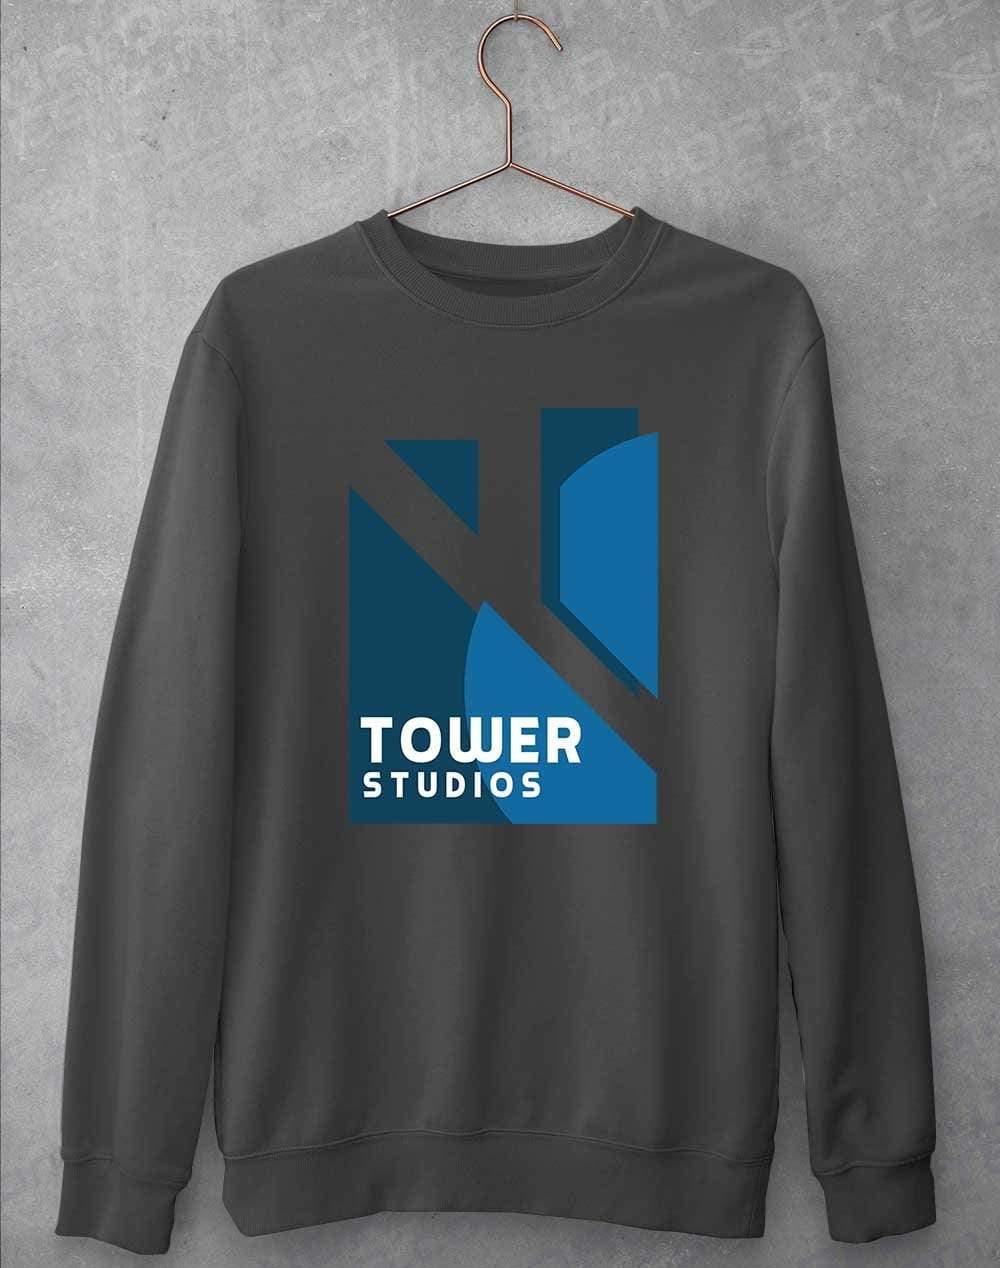 Tower Studios Logo Sweatshirt S / Charcoal  - Off World Tees